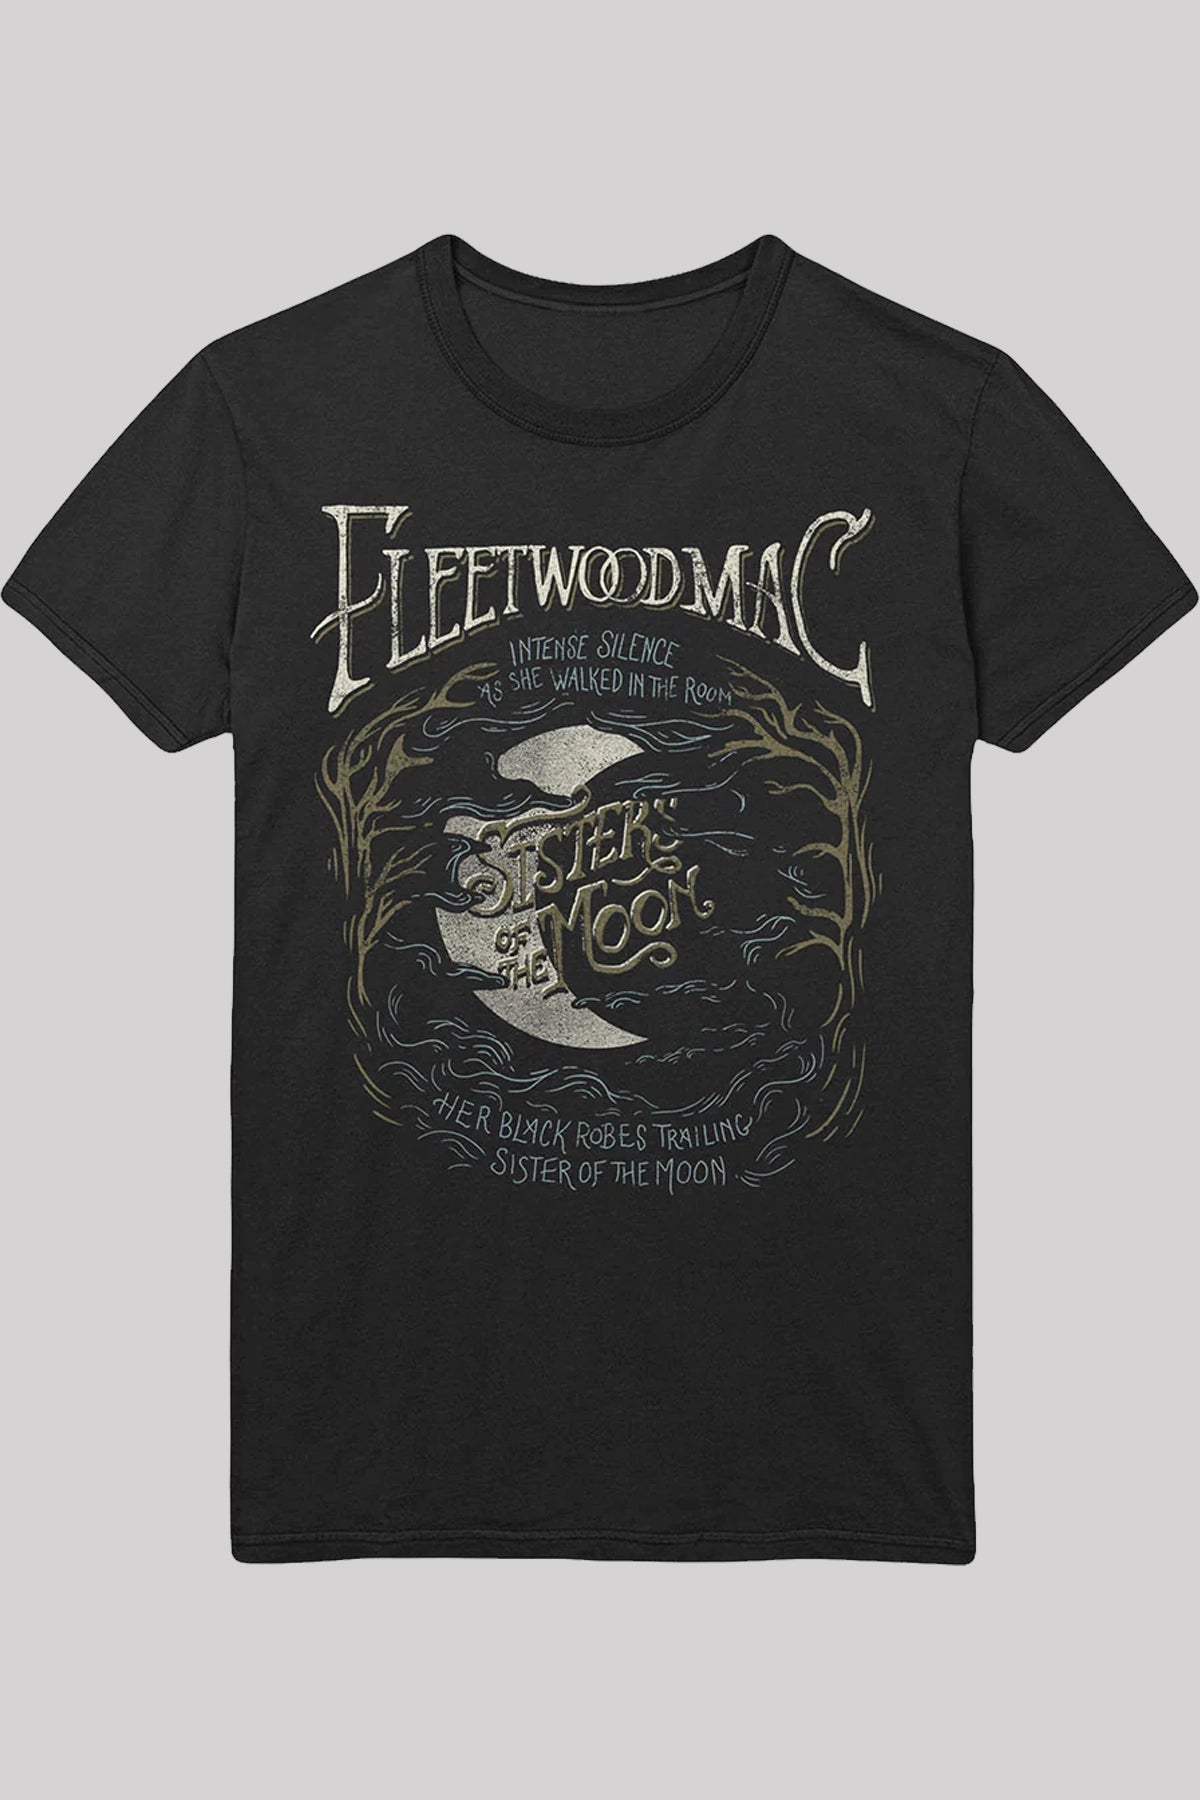 Fleetwood Mac Unisex T-Shirt, Sisters Of The Moon